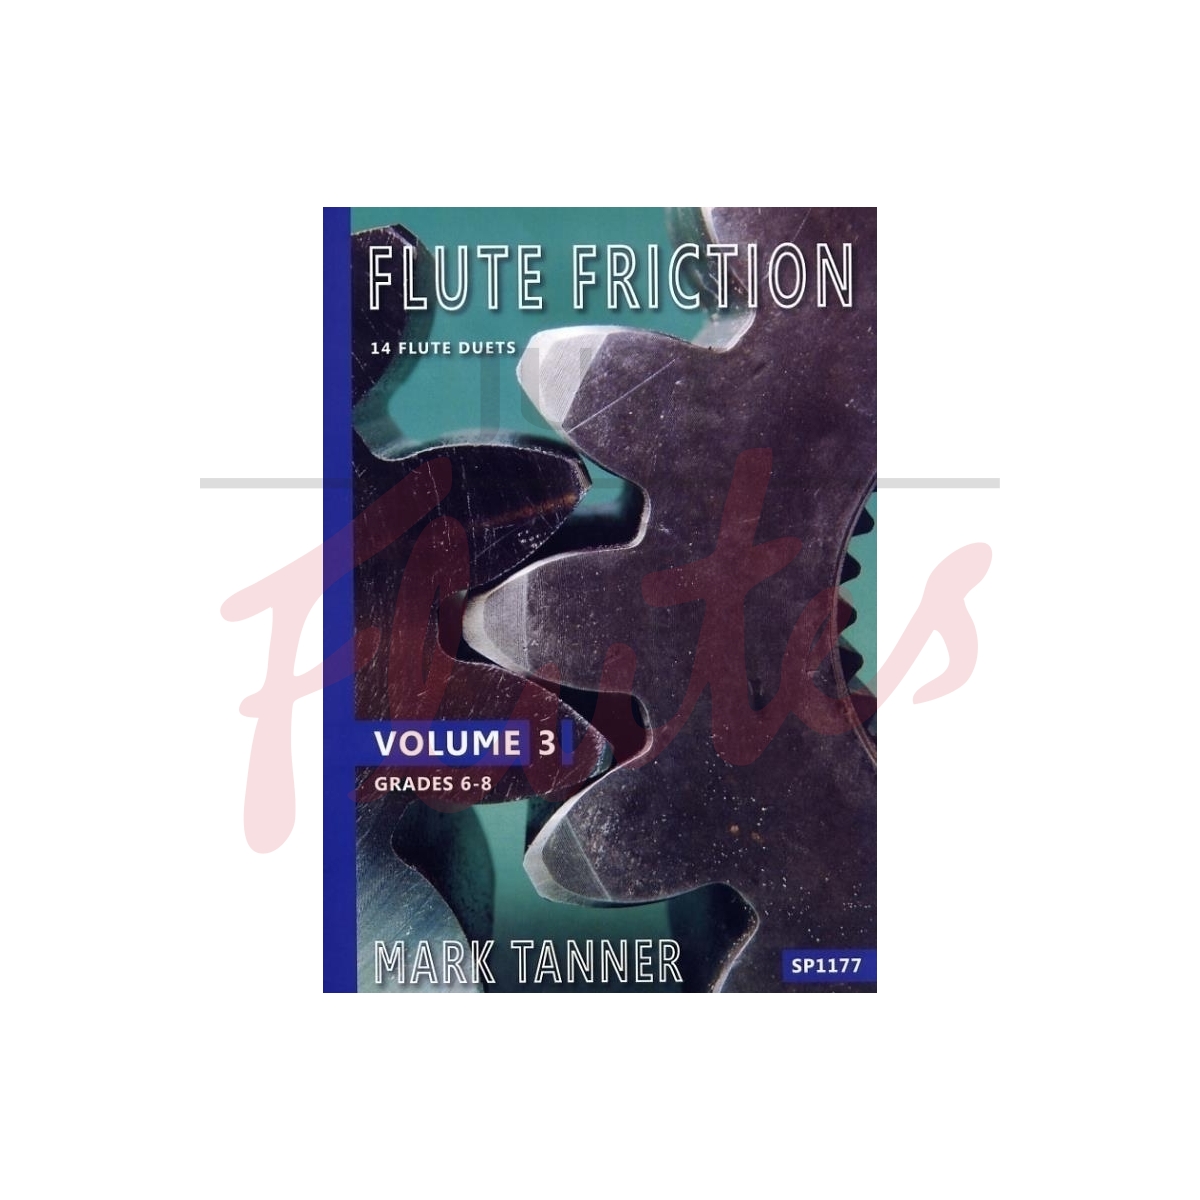 Flute Friction